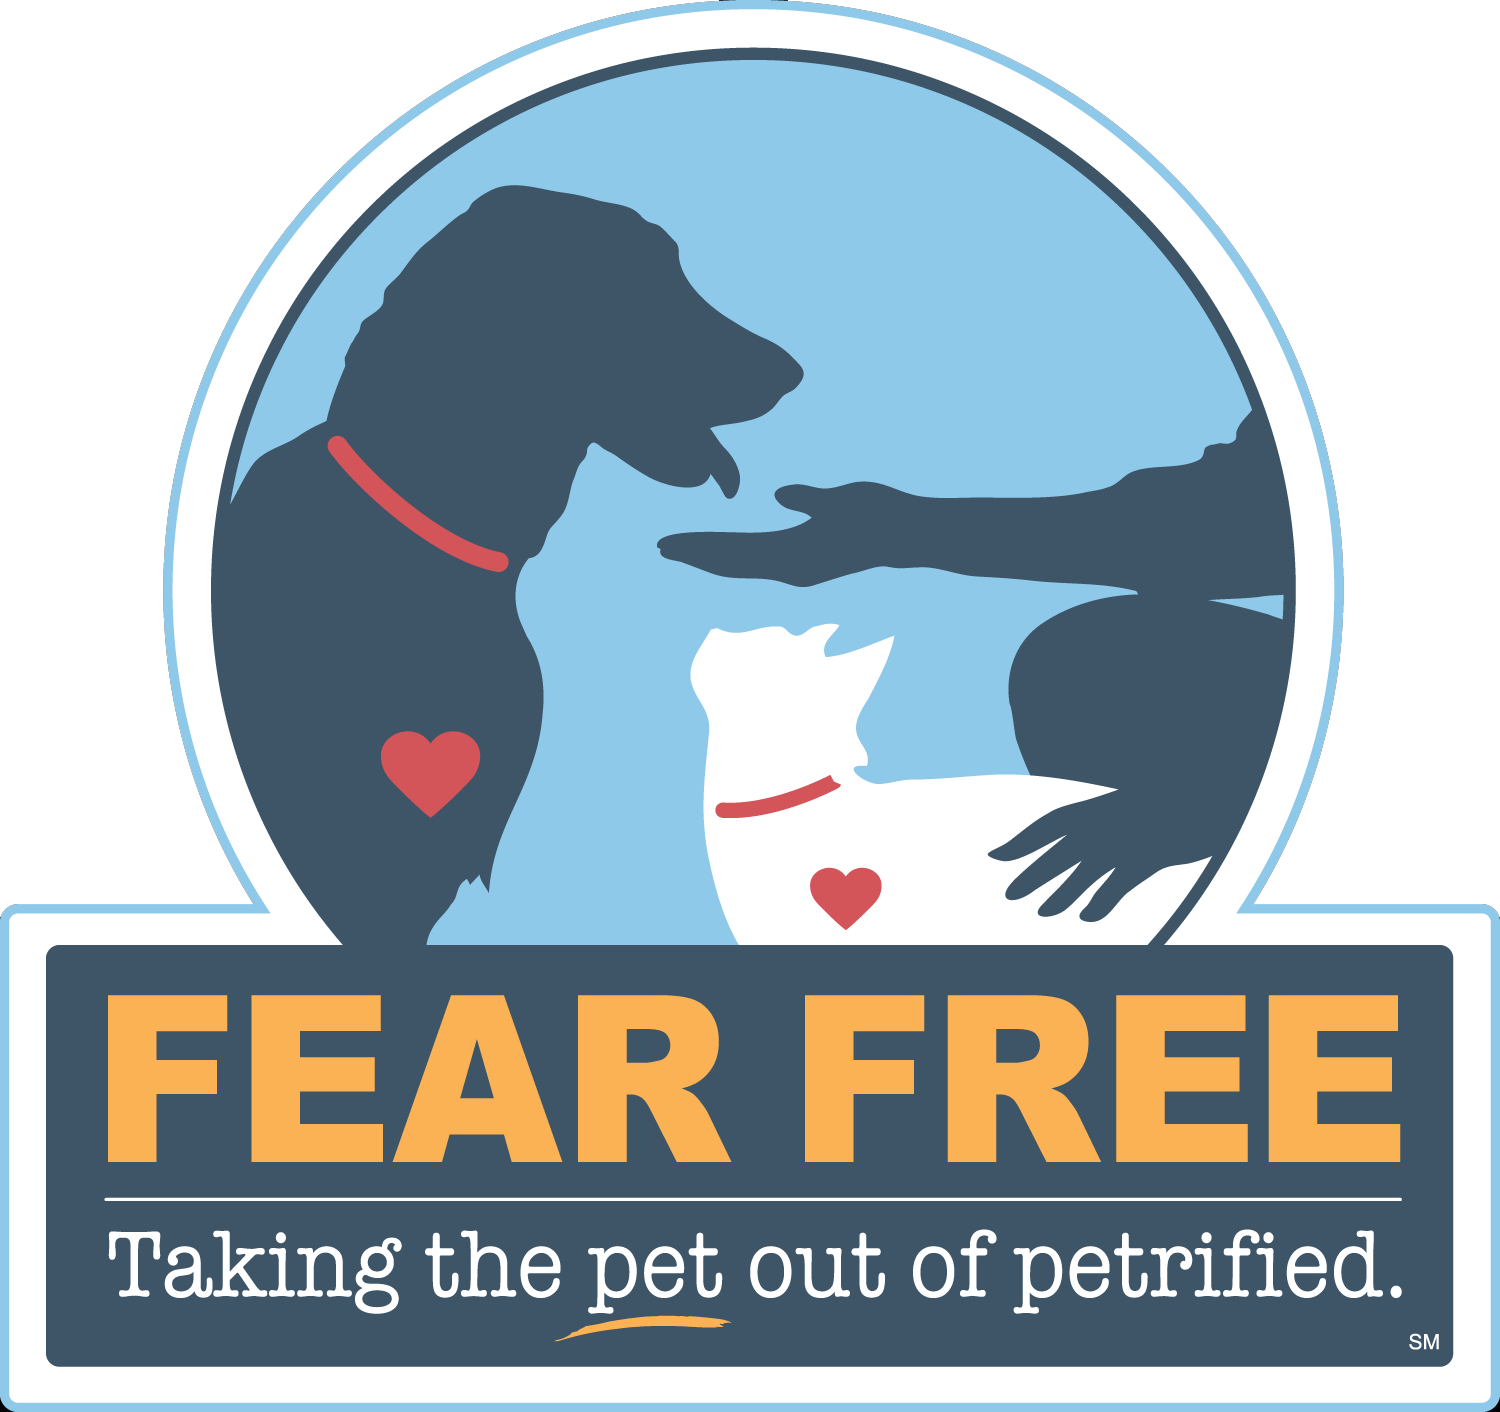 fear free